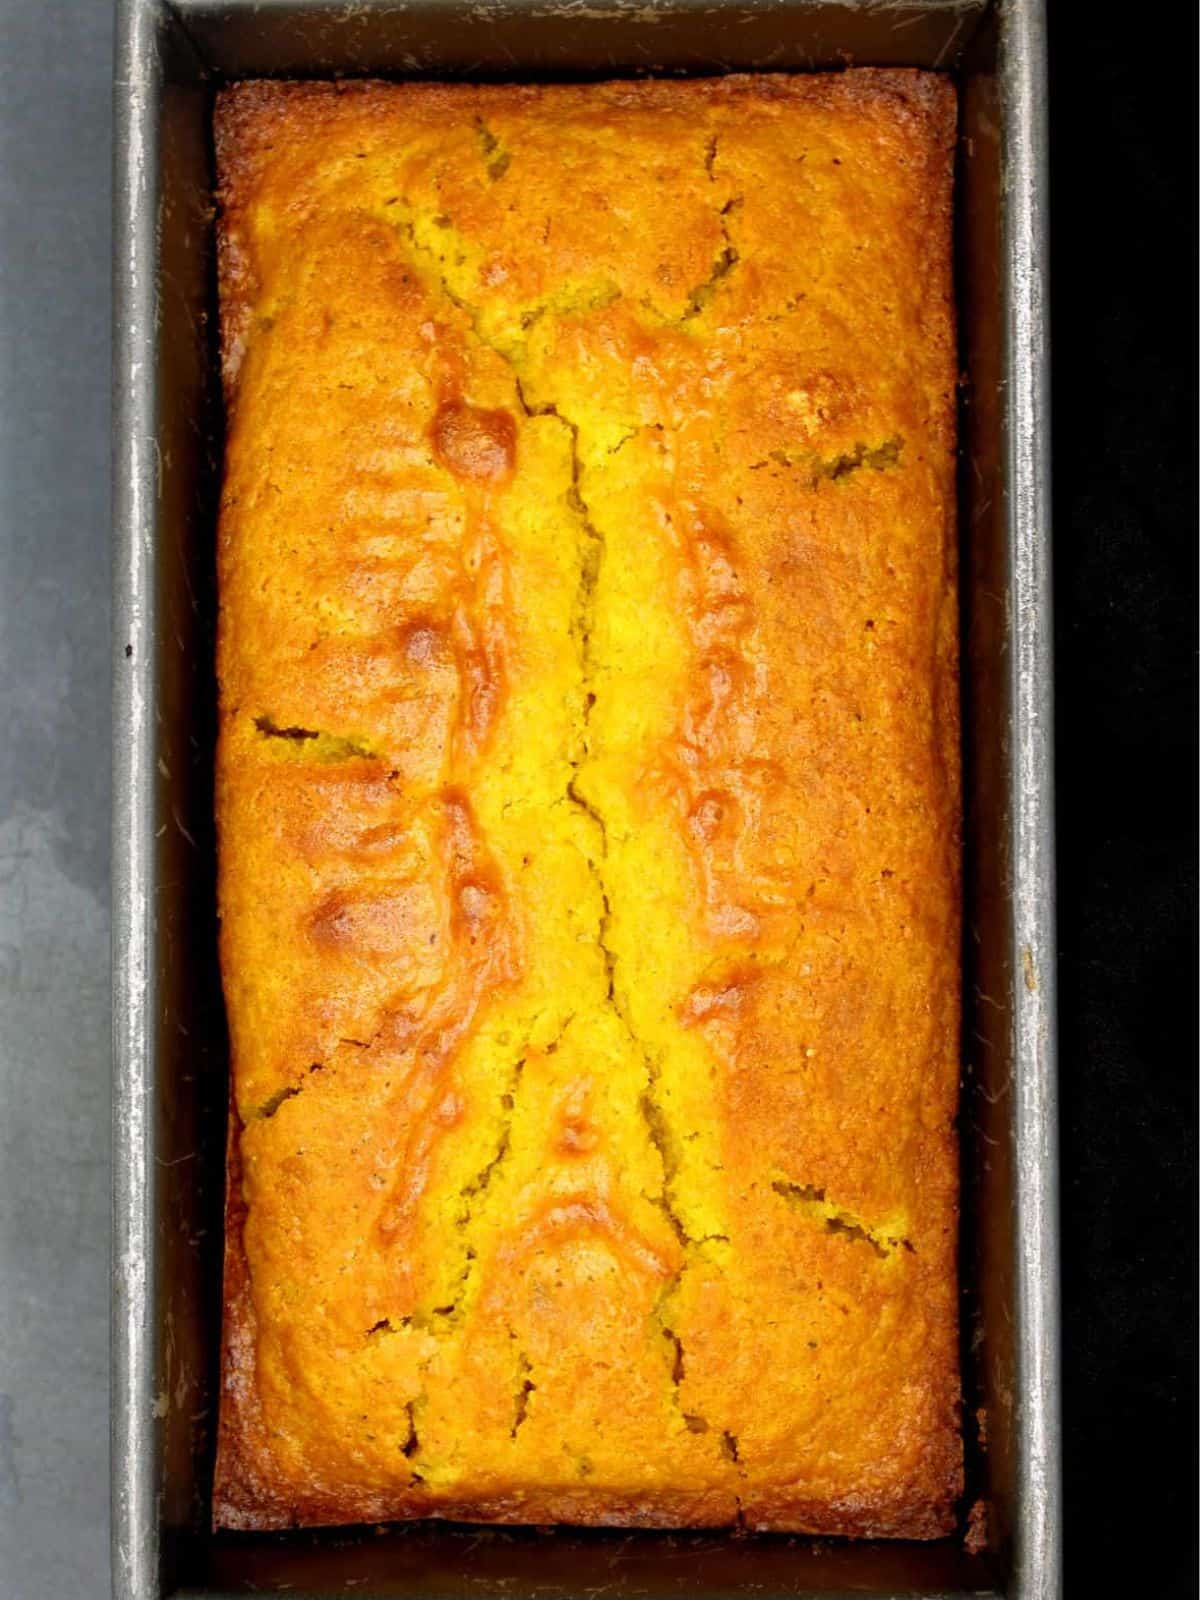 Vegan cardamom turmeric cake in loaf pan.